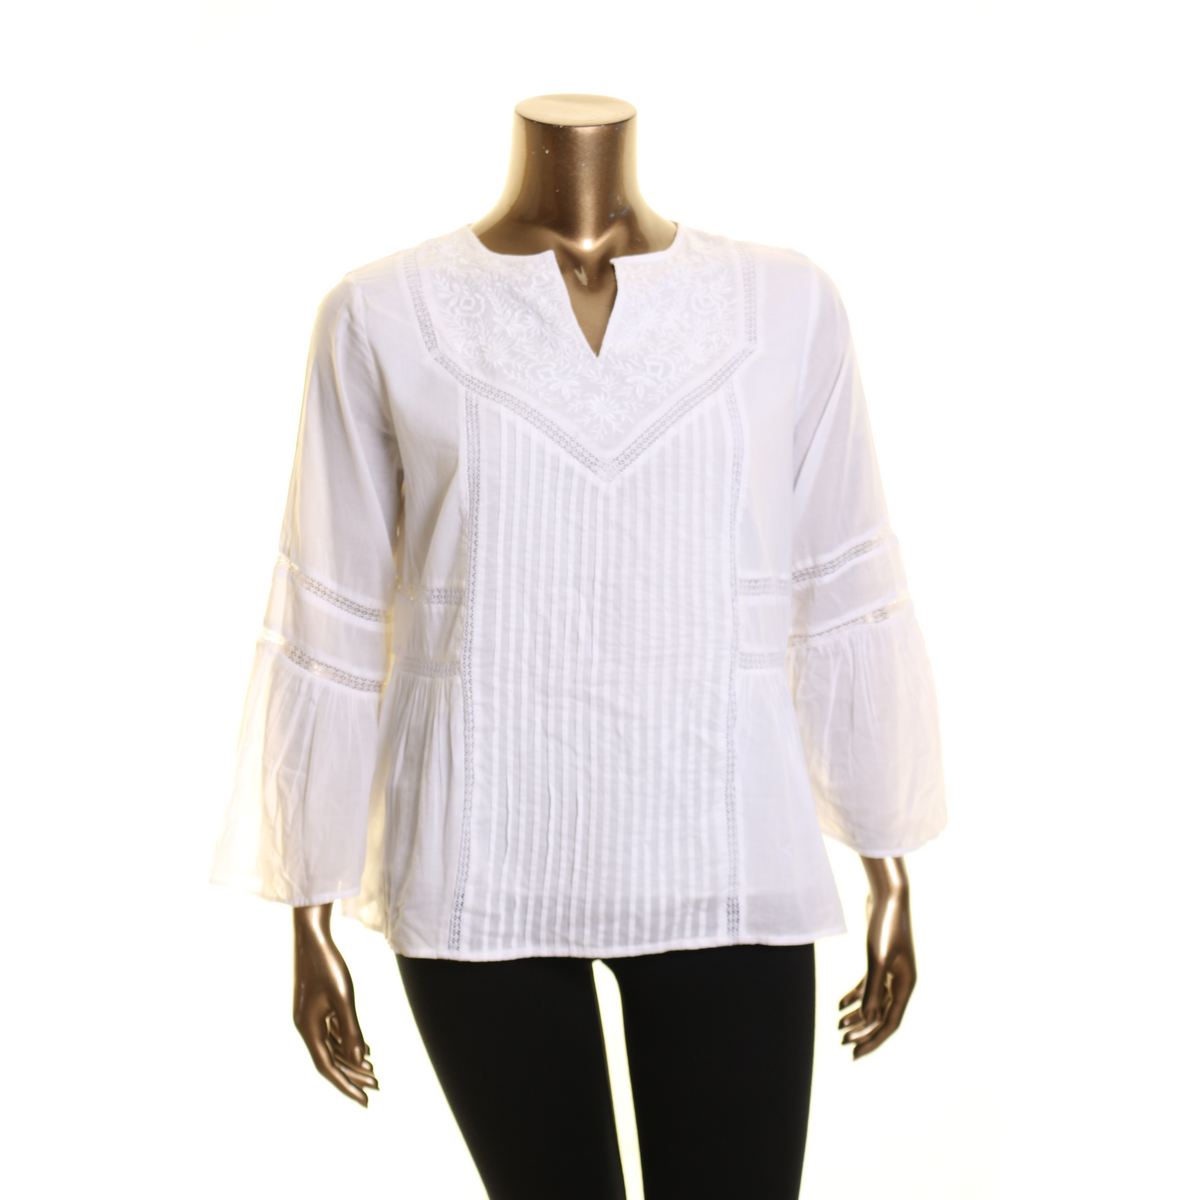 LAUREN RALPH LAUREN Women's White Cotton Embroidered Blouse Shirt Top ...